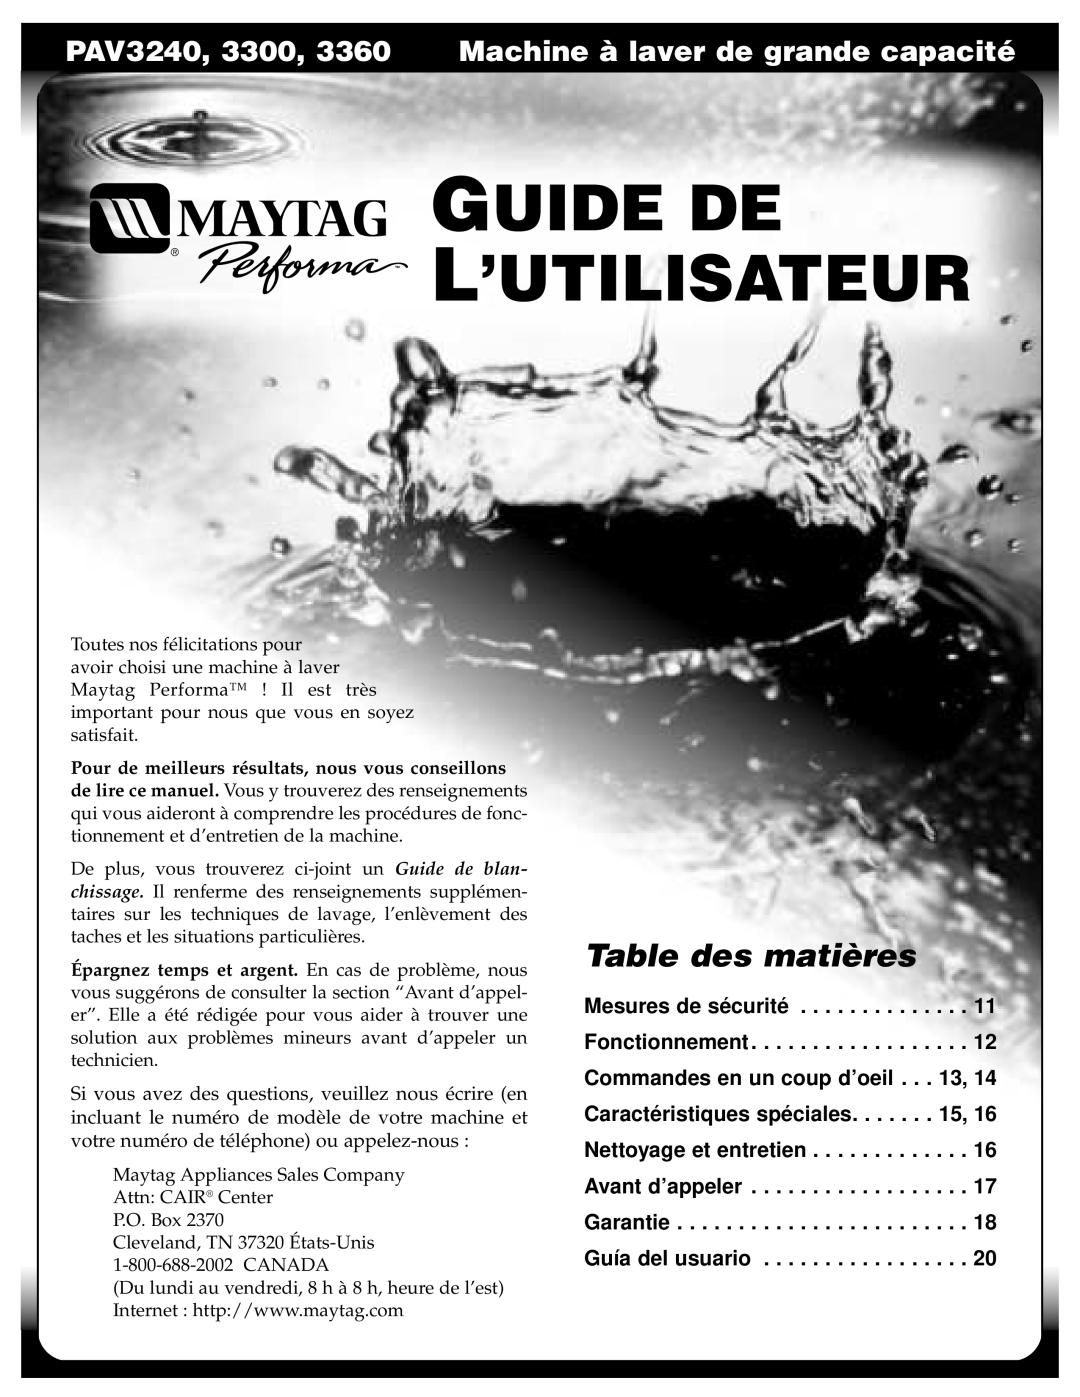 Maytag PAV3240, PAV3300, PAV3360 warranty Table des matières, Guide De L’Utilisateur 